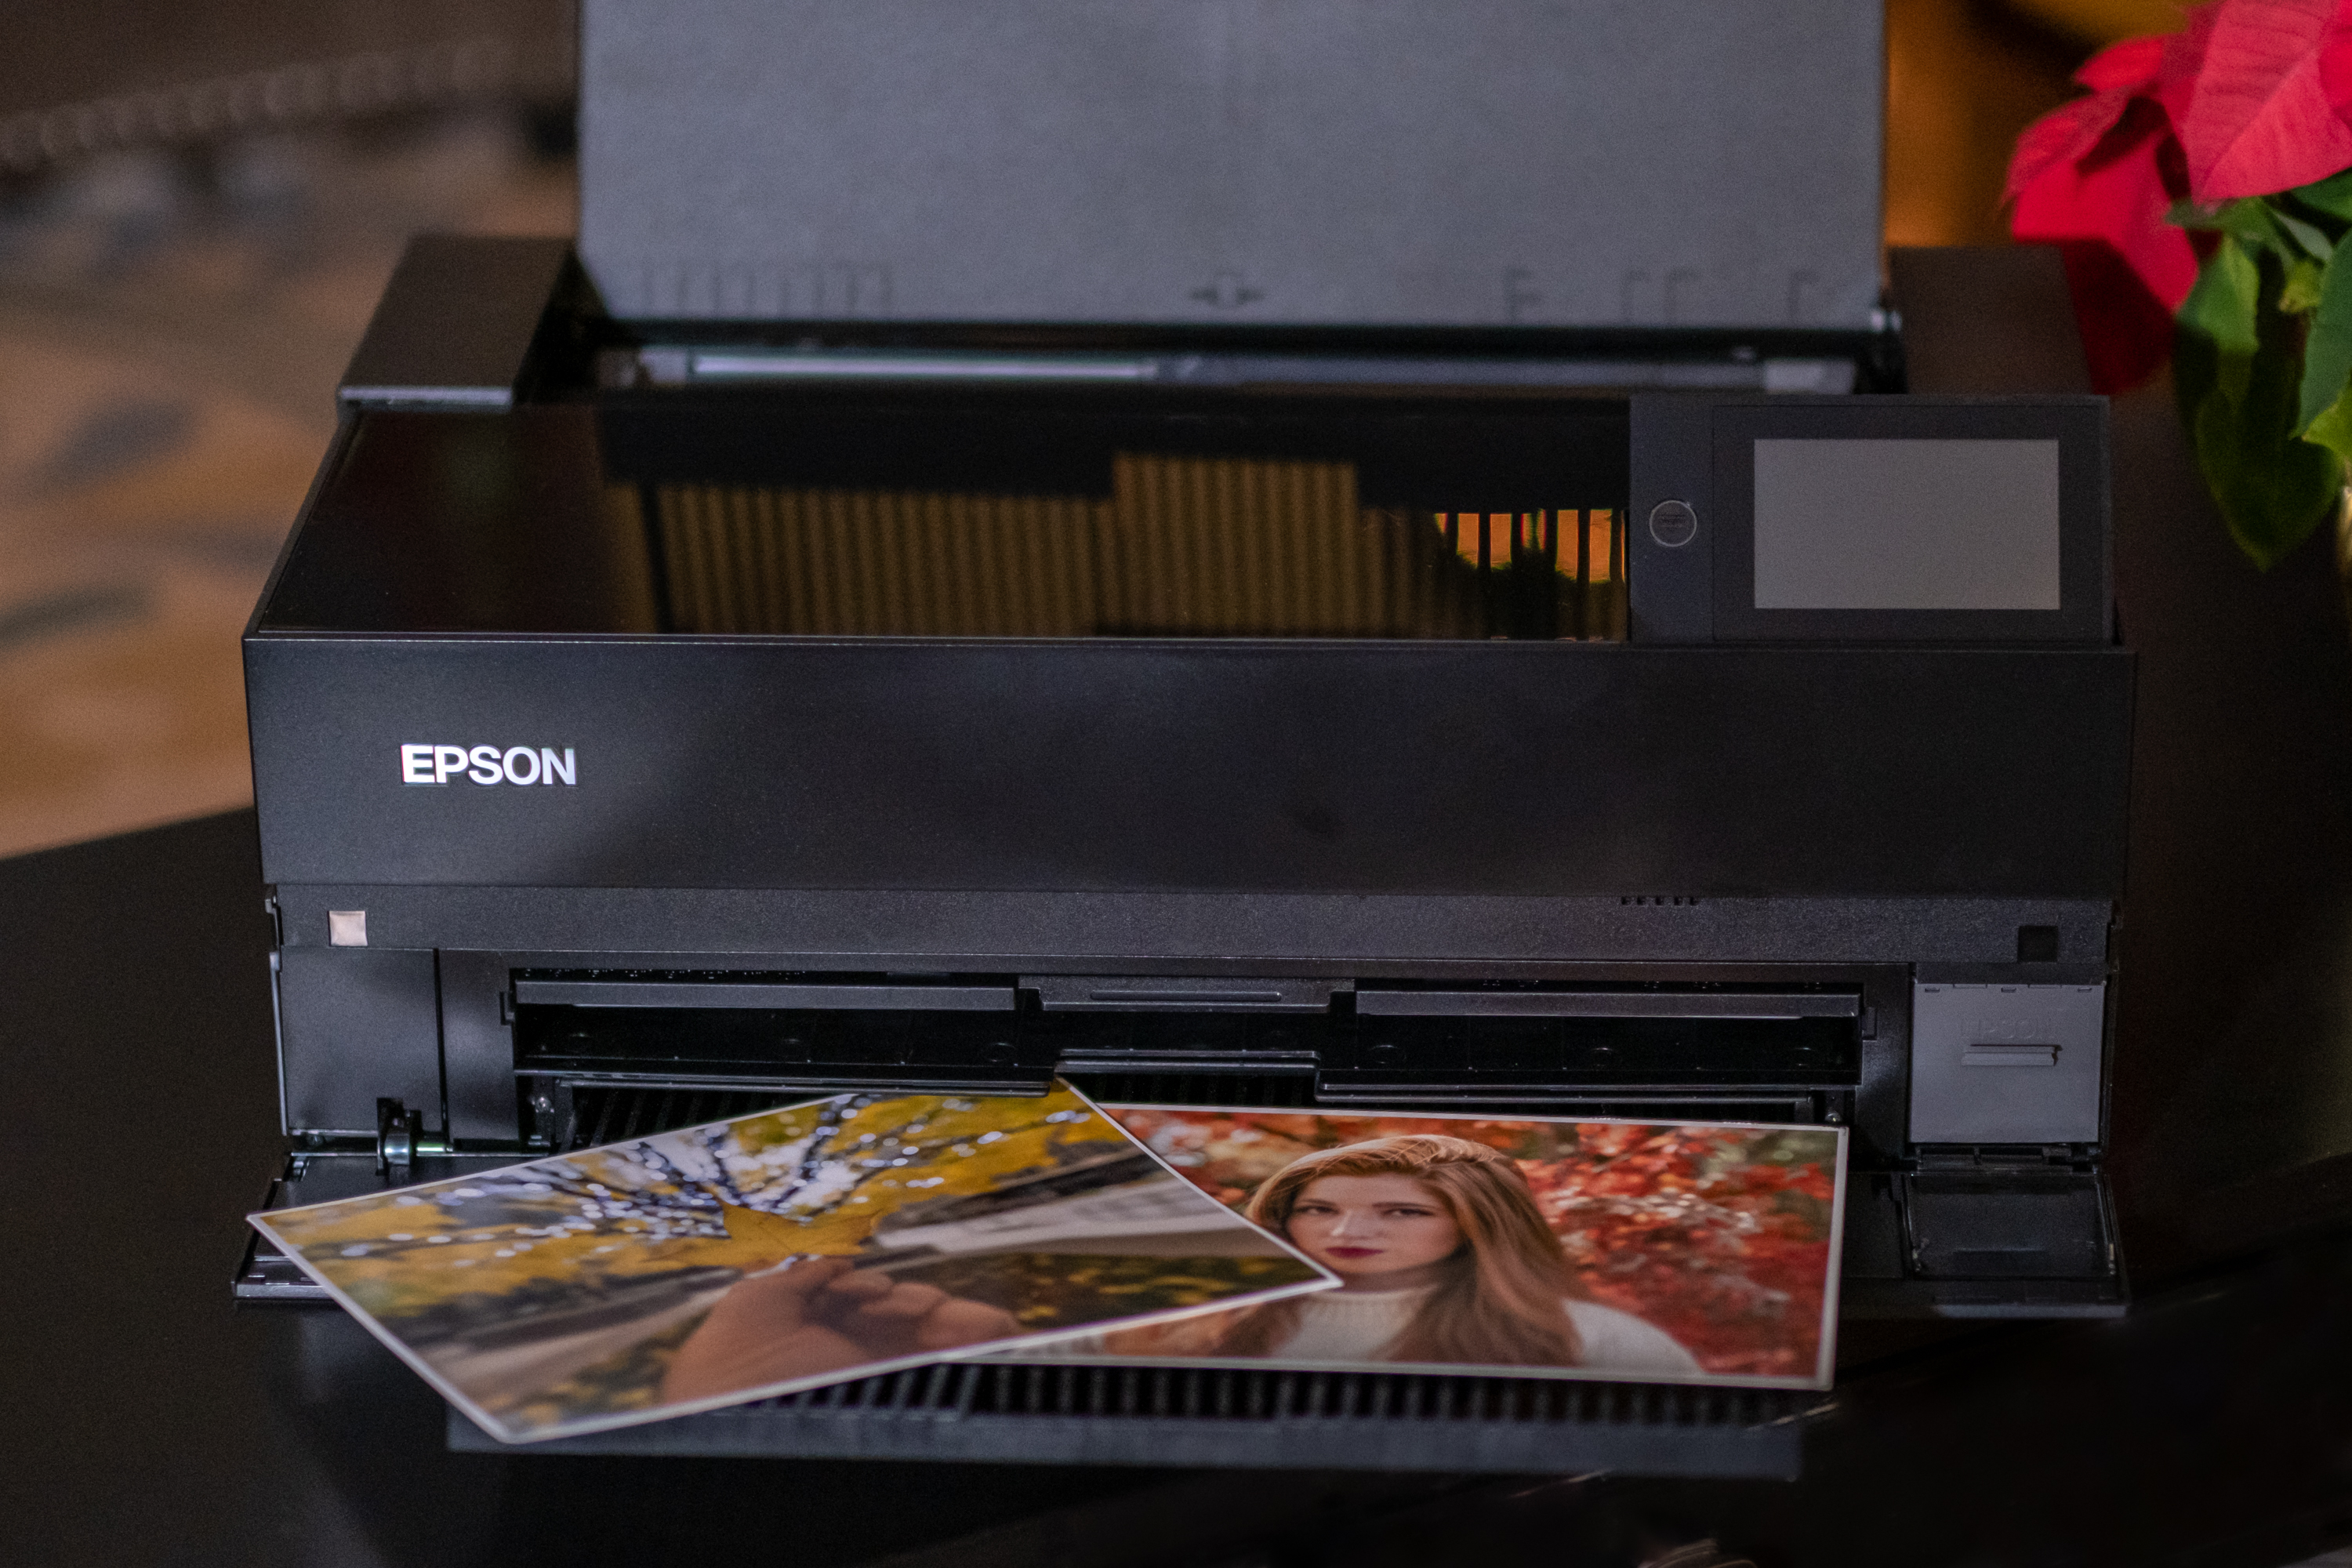 Big, Beautiful Prints That Will Amaze: Epson SureColor P900 Review